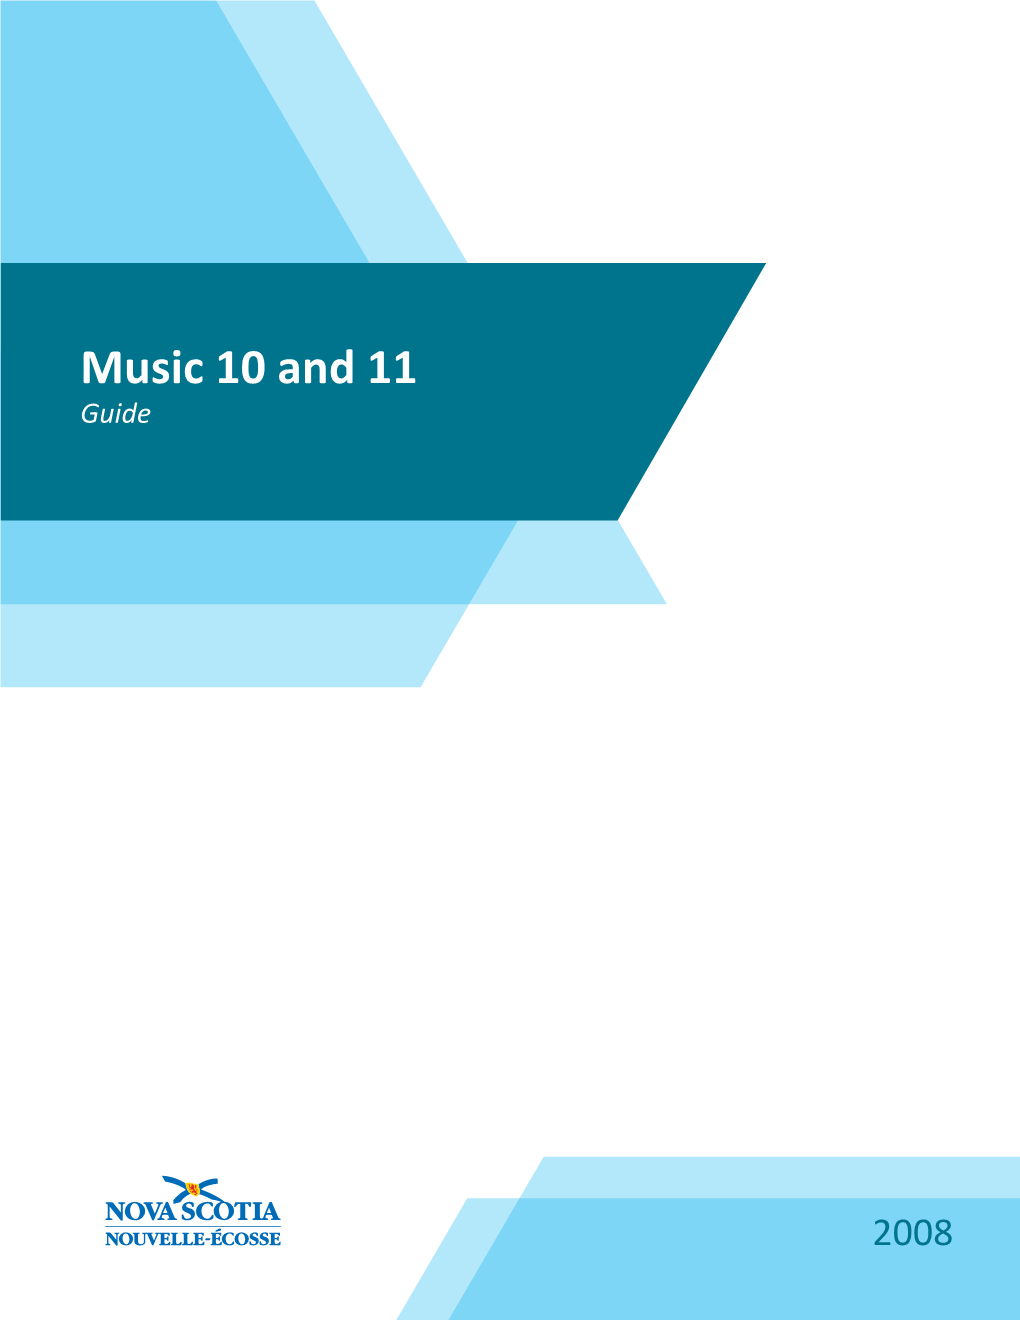 Music 10-11 Guide